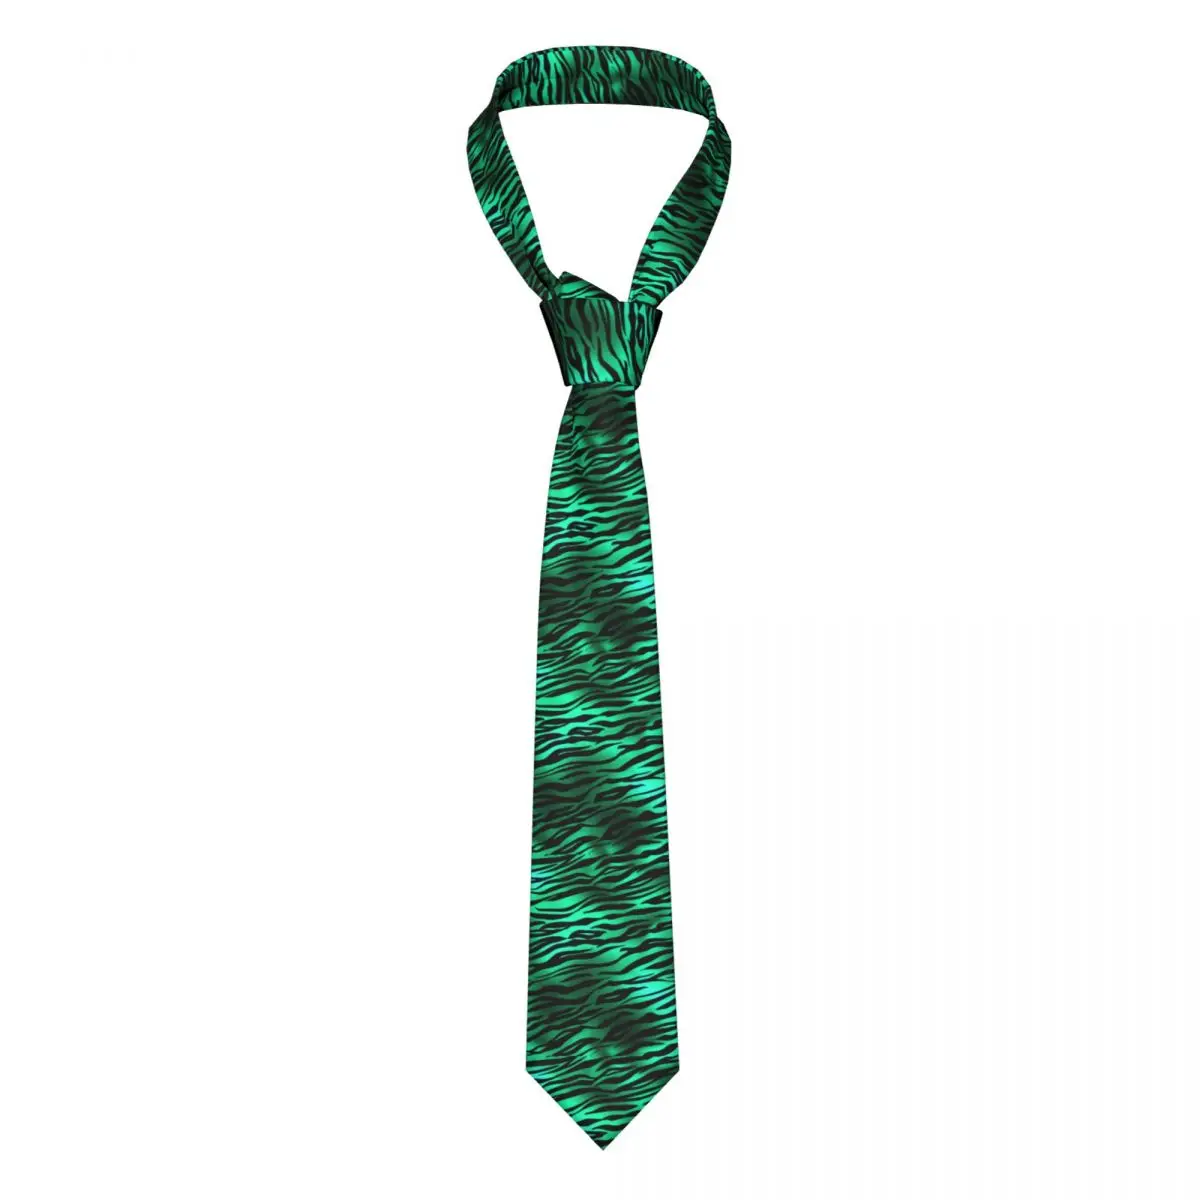 

Zebra Print Tie Green And Black Stripes 8CM Design Neck Ties Gift Party Men Blouse Cravat